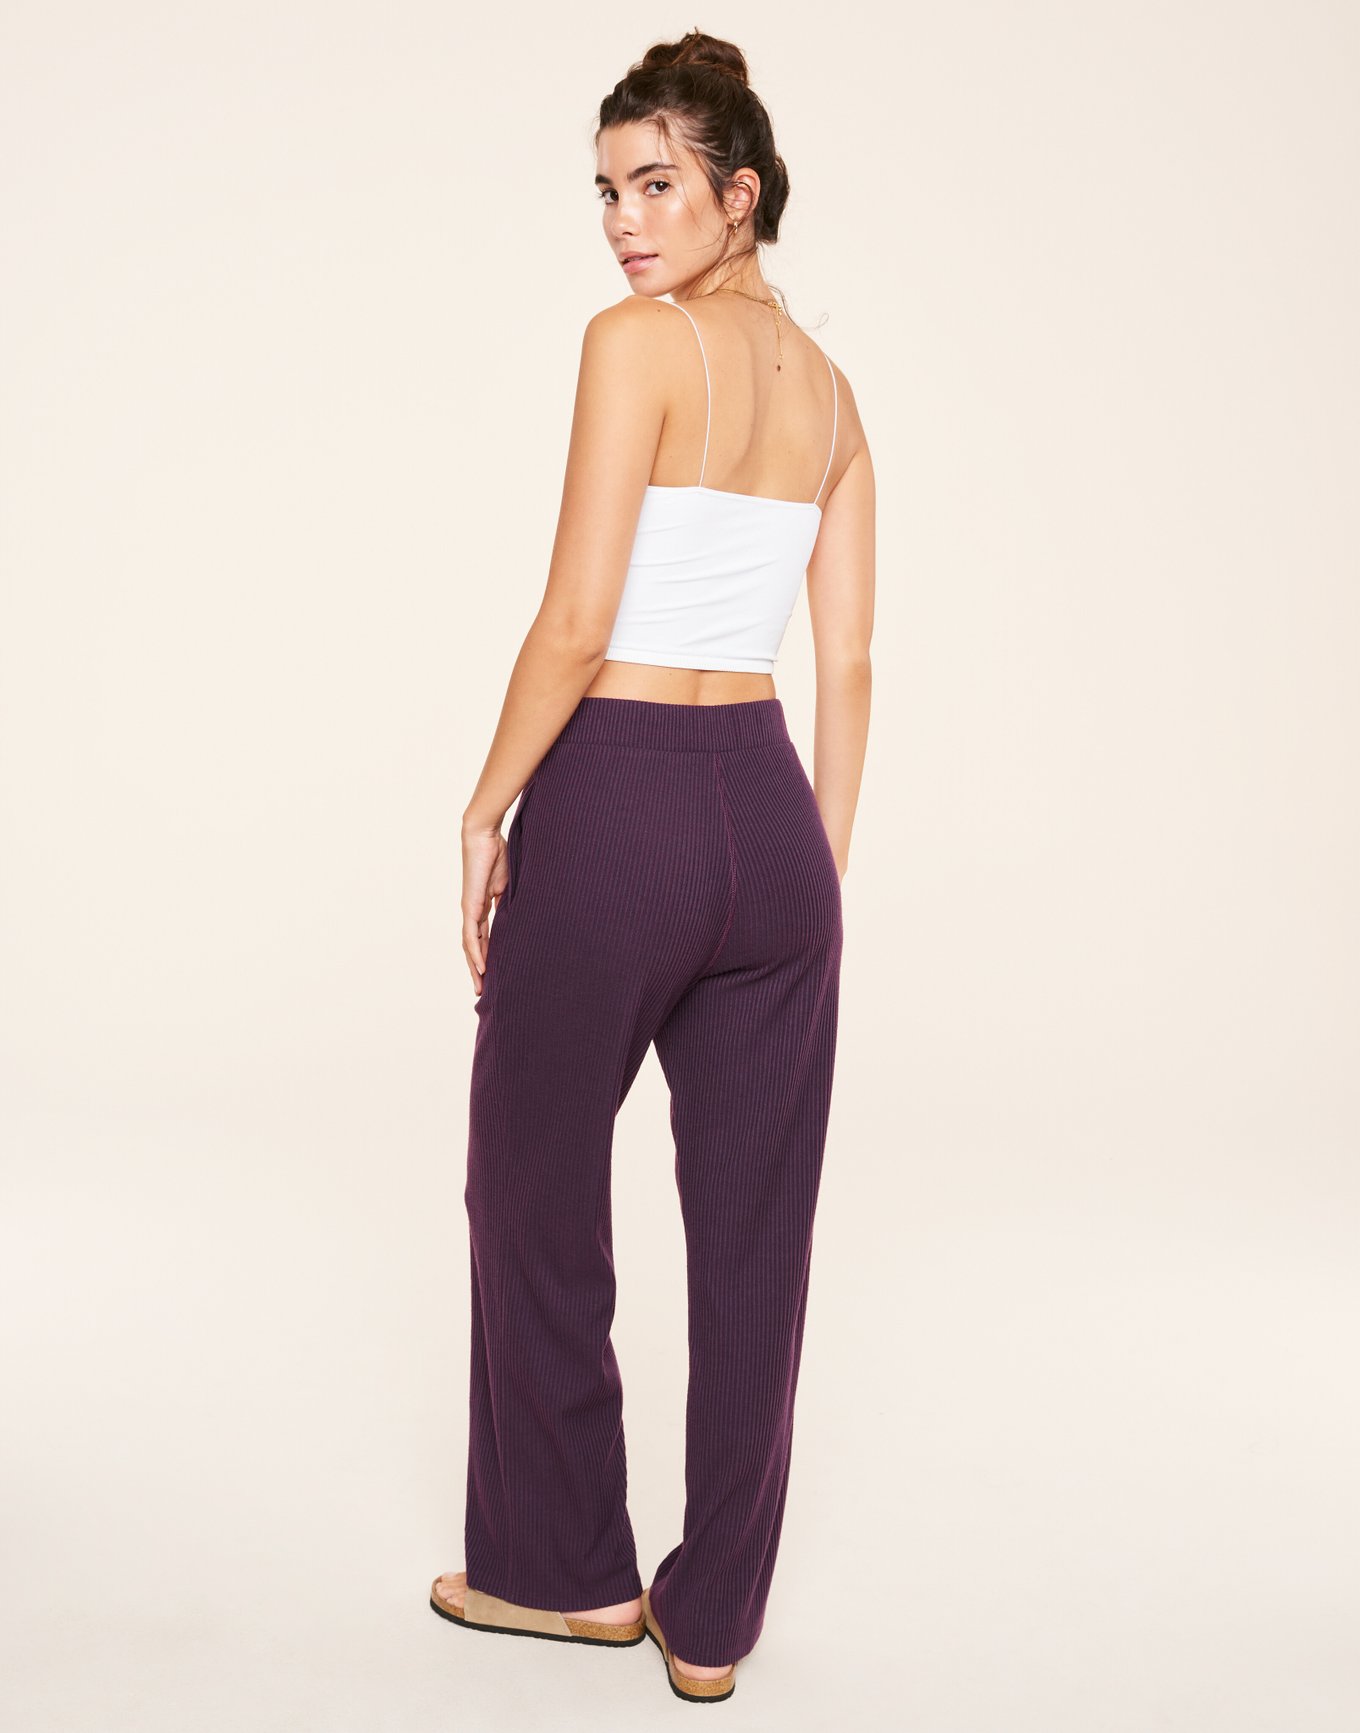 Primadonna Style: Work Week Chic: How to Wear Purple Pants